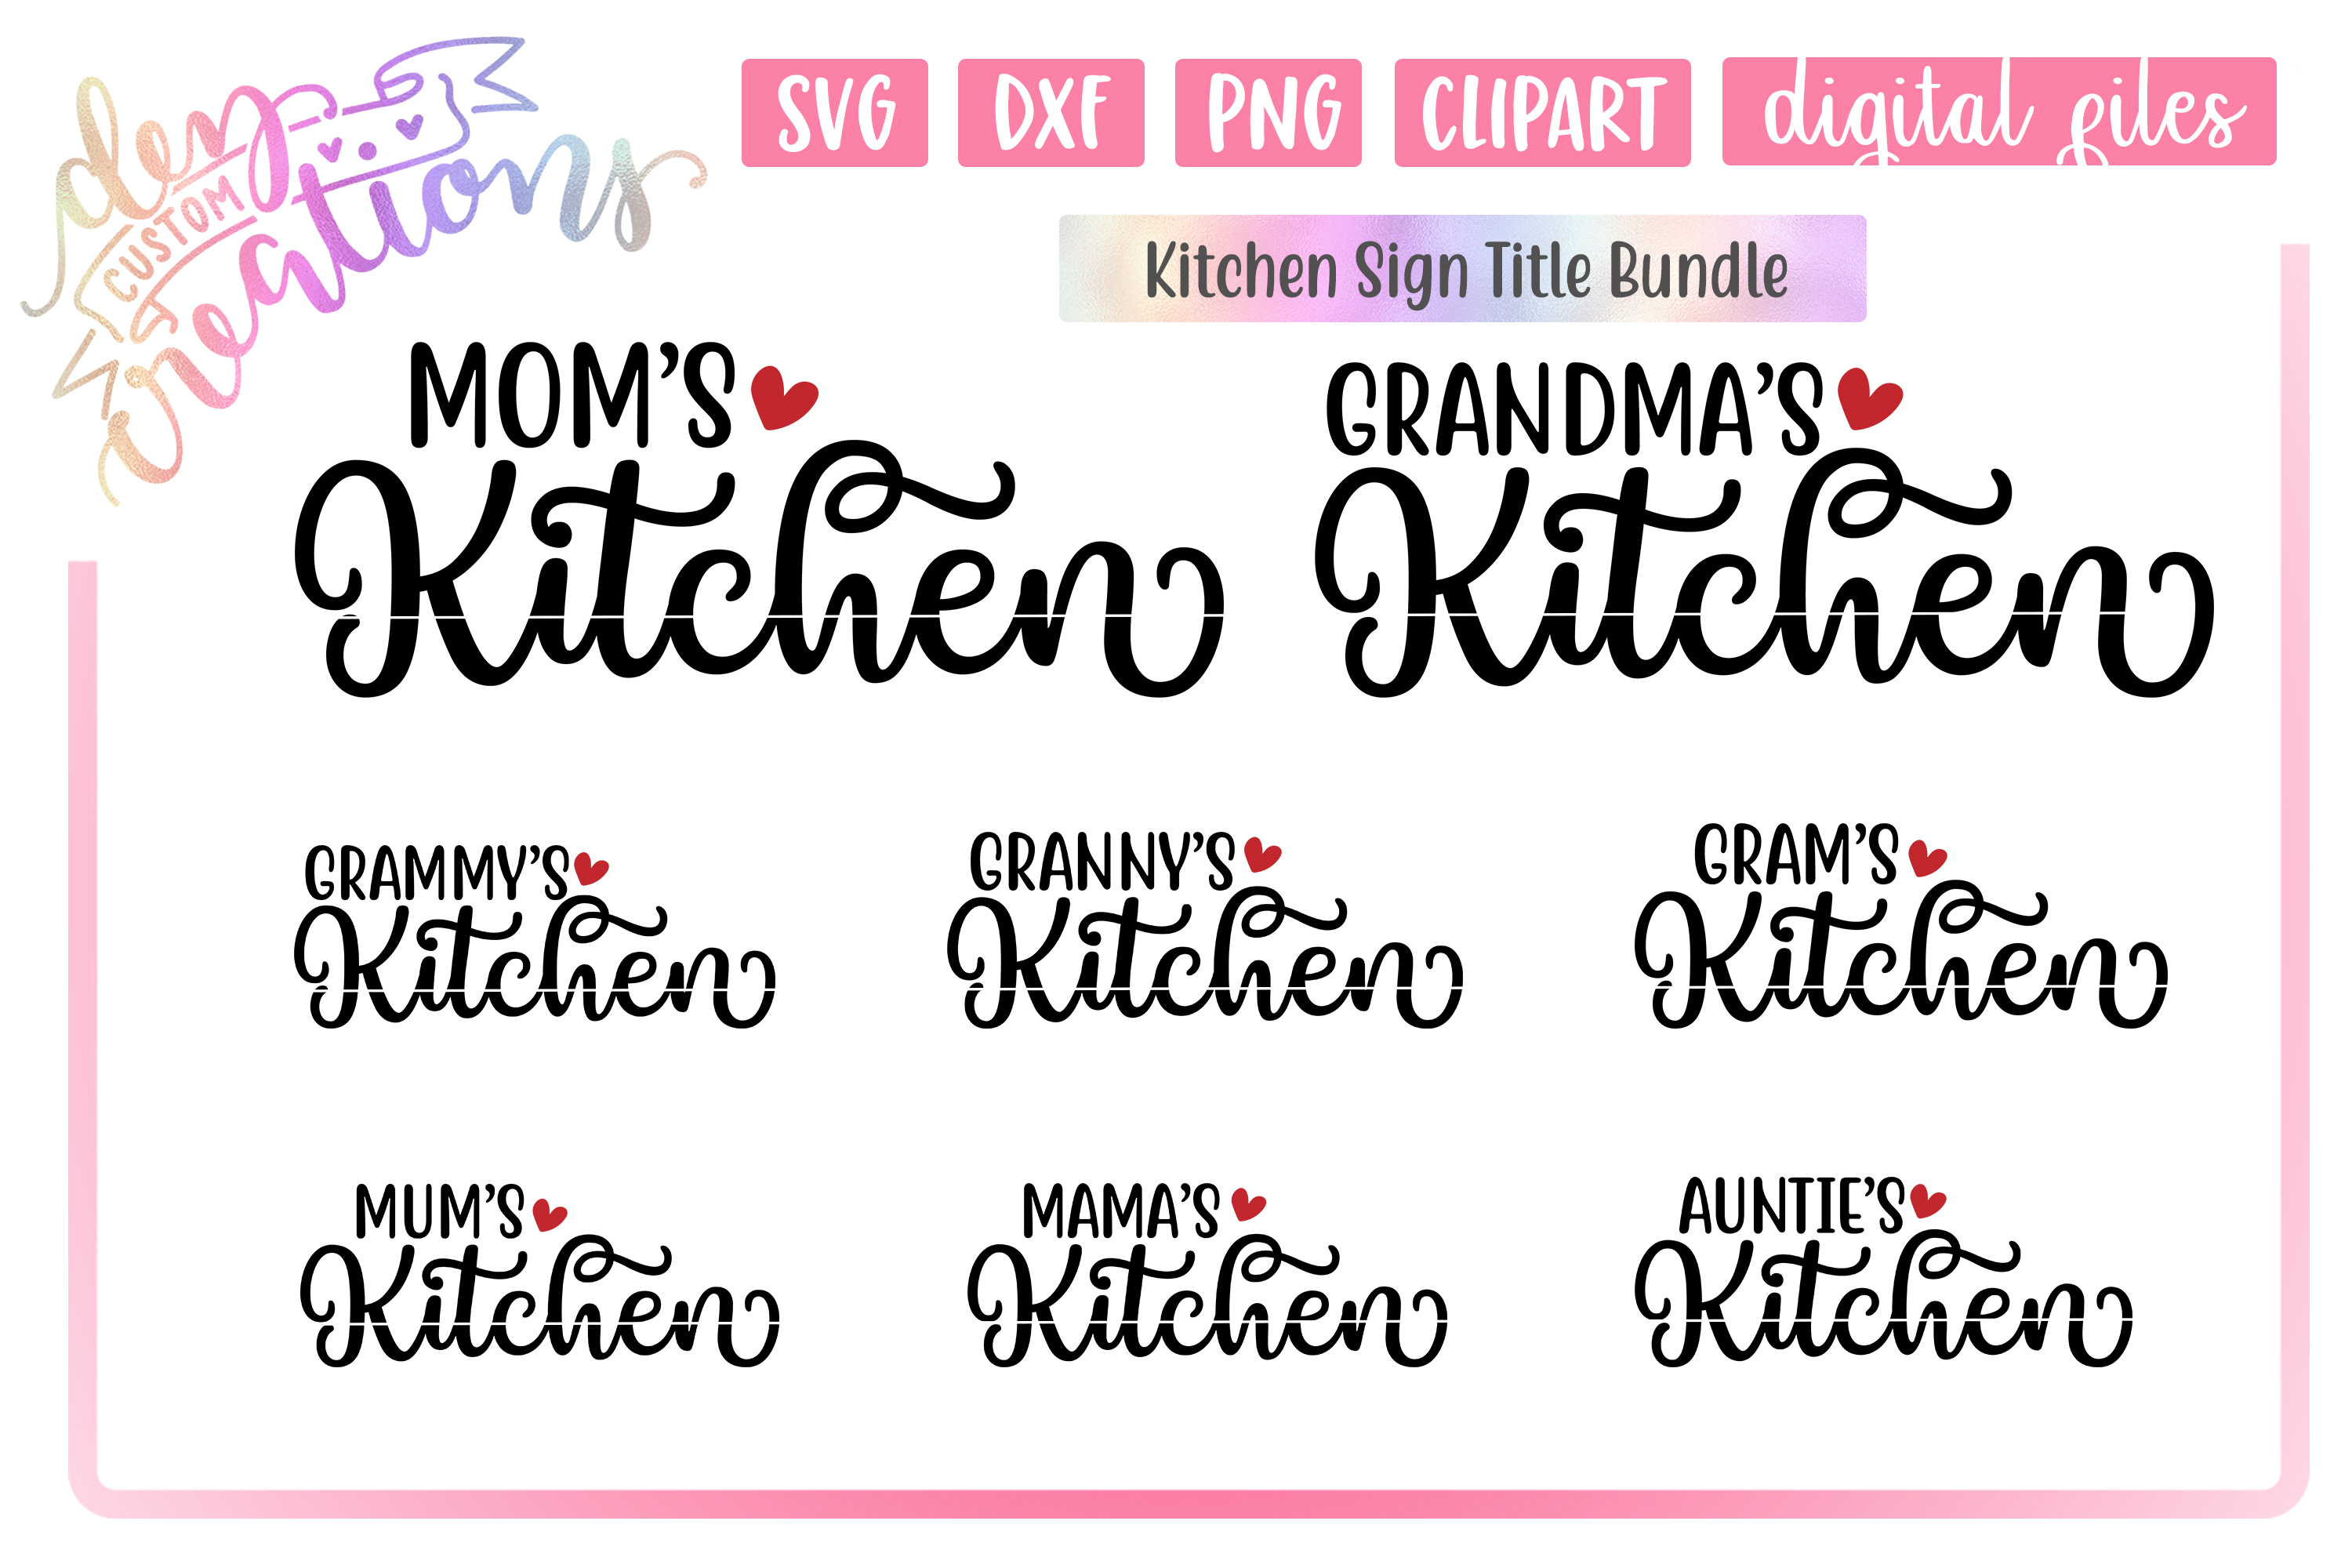 Download Kitchen Sign Title Bundle - Mom's Kitchen - SVG cut files (280007) | Cut Files | Design Bundles